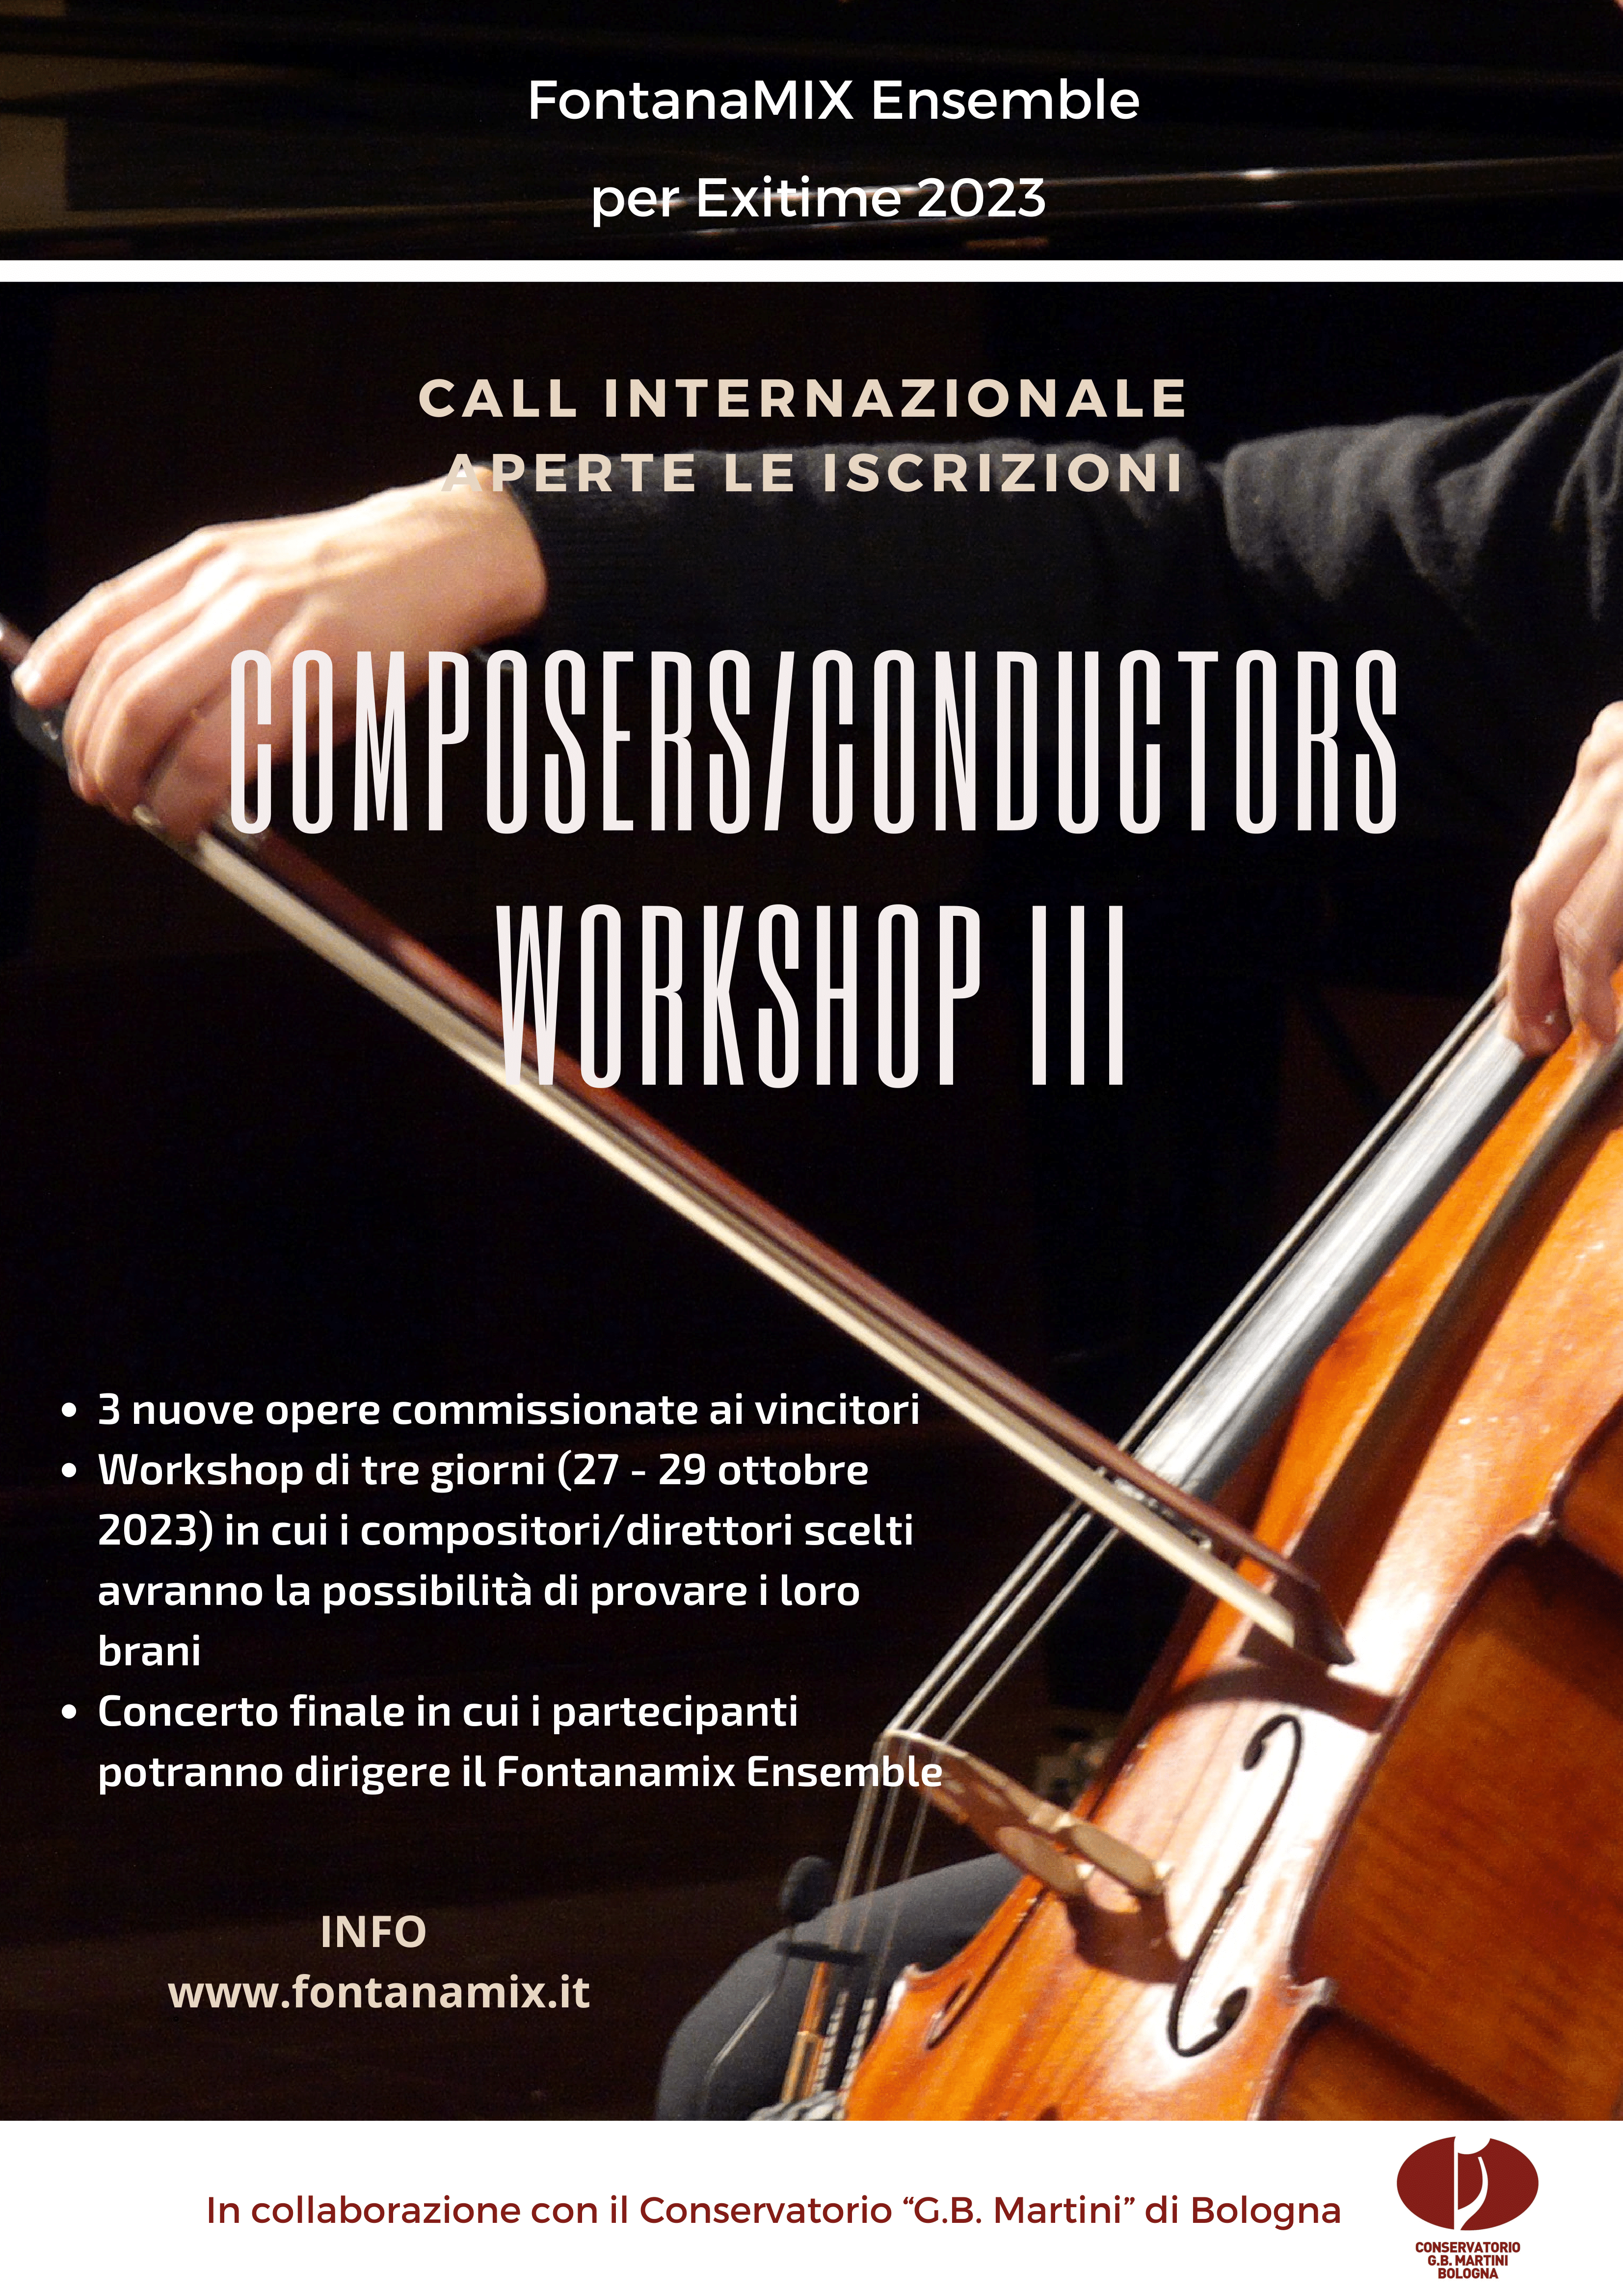 Composers/Conductors Workshop - III edizione